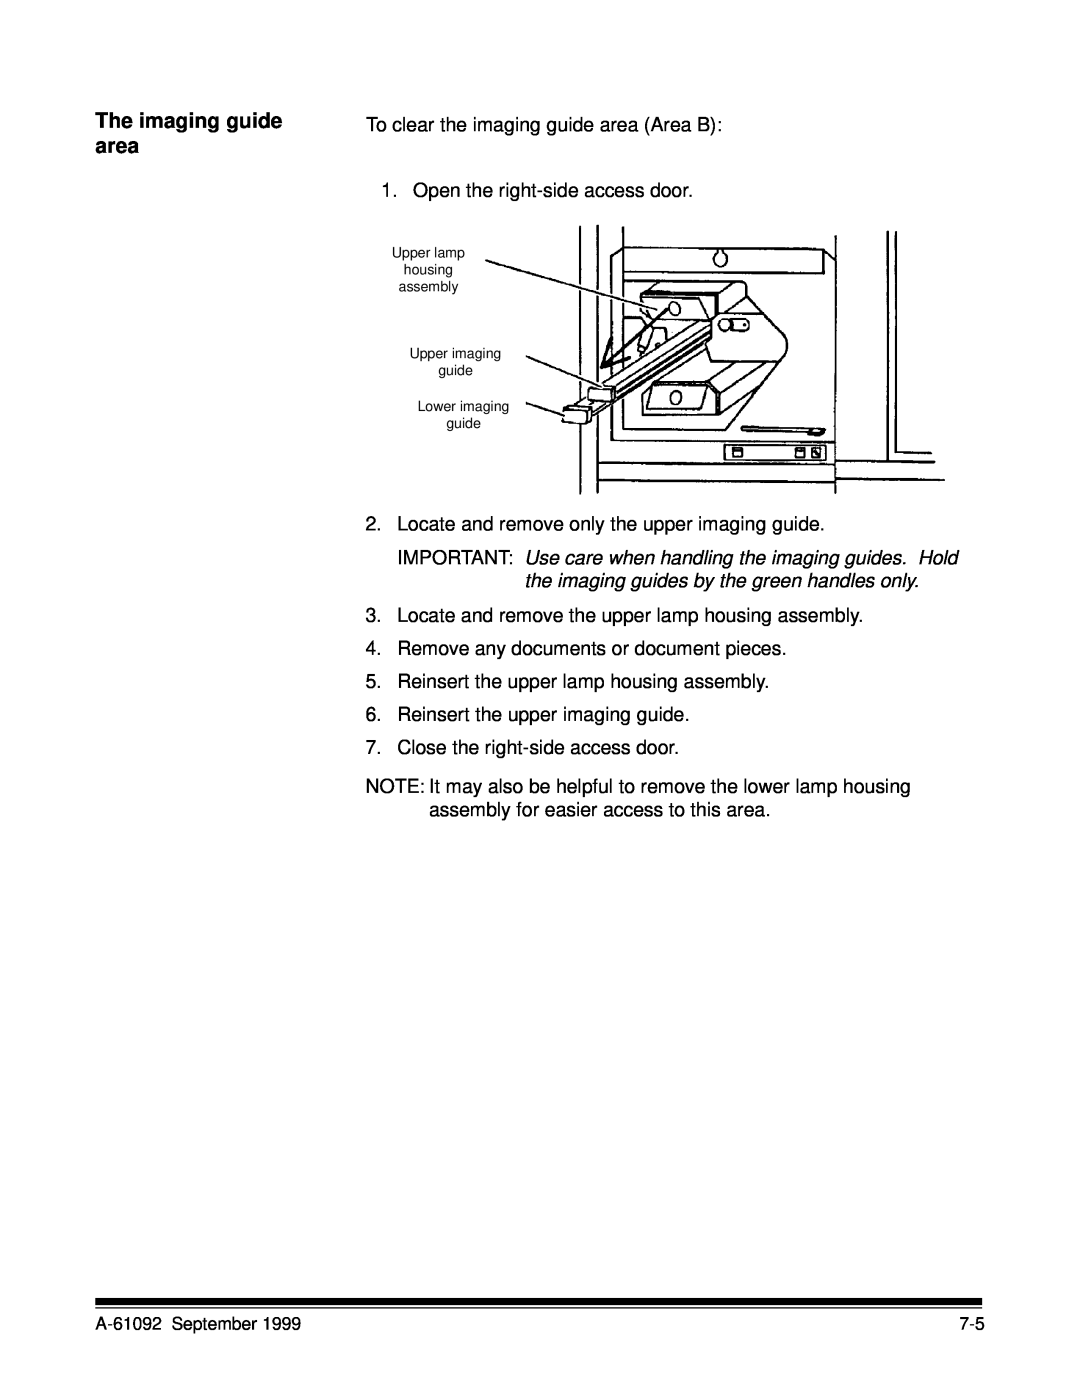 Kodak A-61092 manual The imaging guide area, Upper lamp housing assembly Upper imaging guide Lower imaging guide 